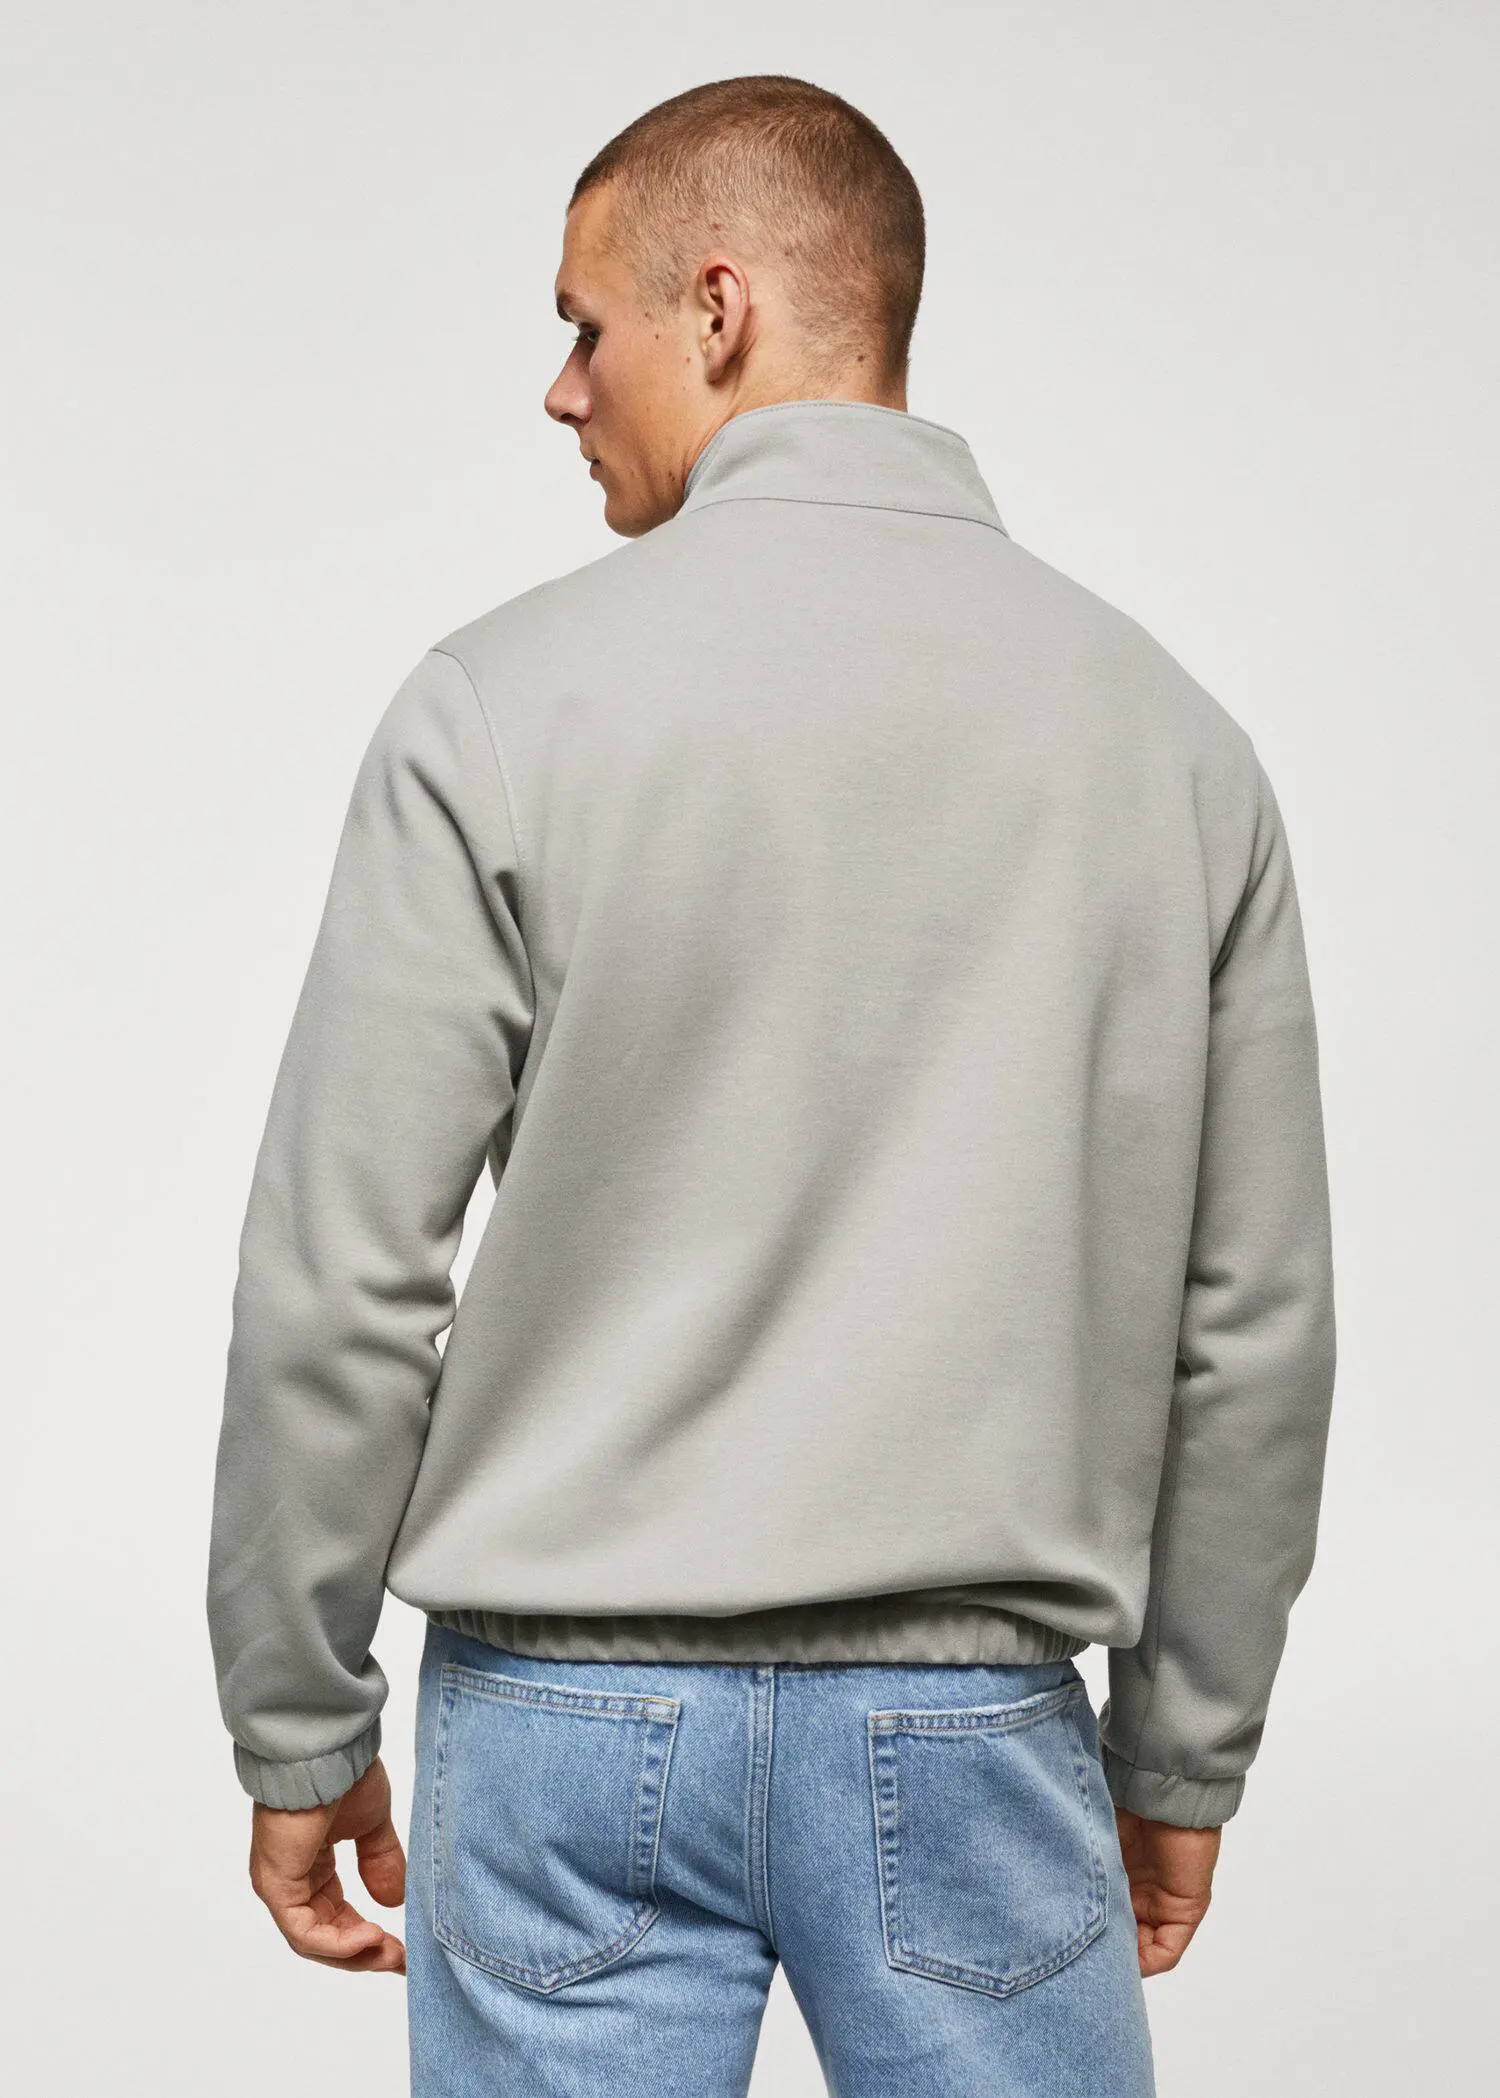 Mango Cotton sweatshirt with zip neck. 3